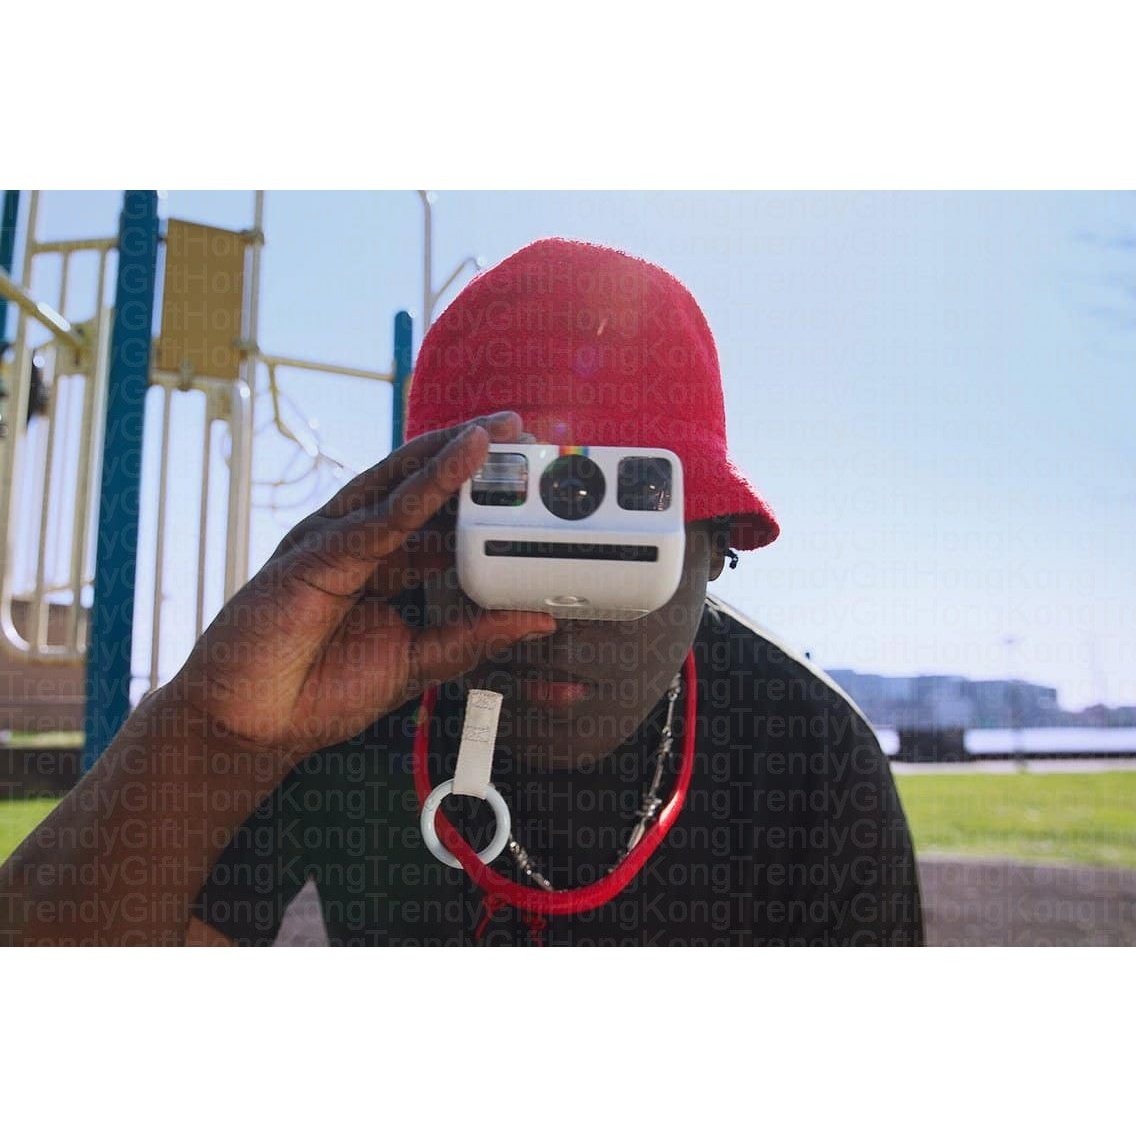 Polaroid Go Instant Mini Camera: Capture Memories Instantly and Creatively trendygifthk